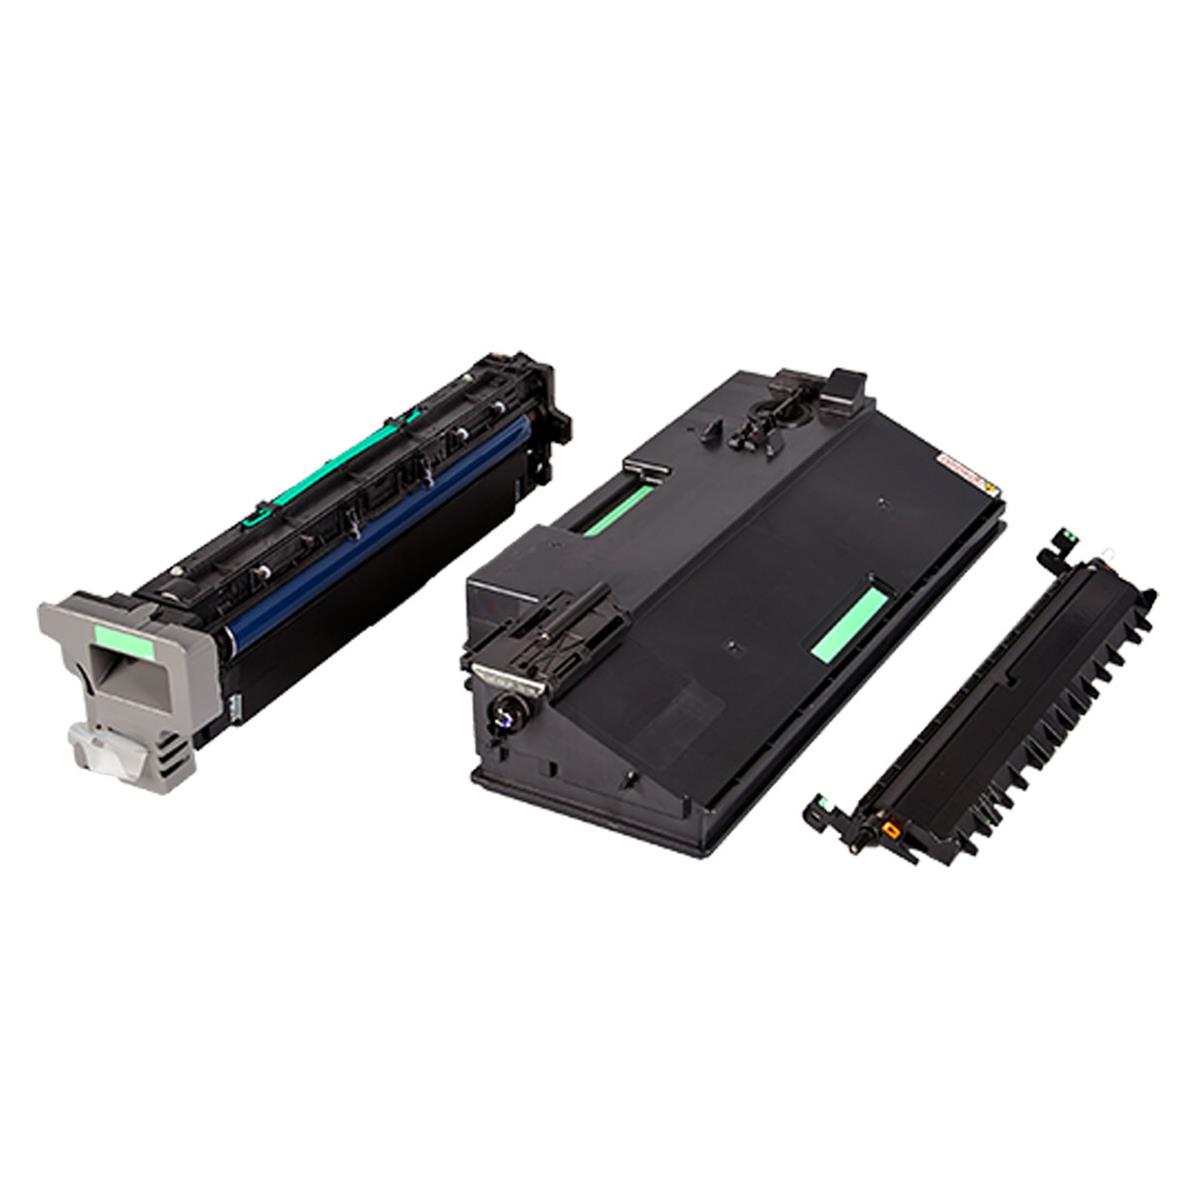 Photos - Printer Part Ricoh Maintenance Kit A for SP 8400DN Black and White Laser Printer 408107 